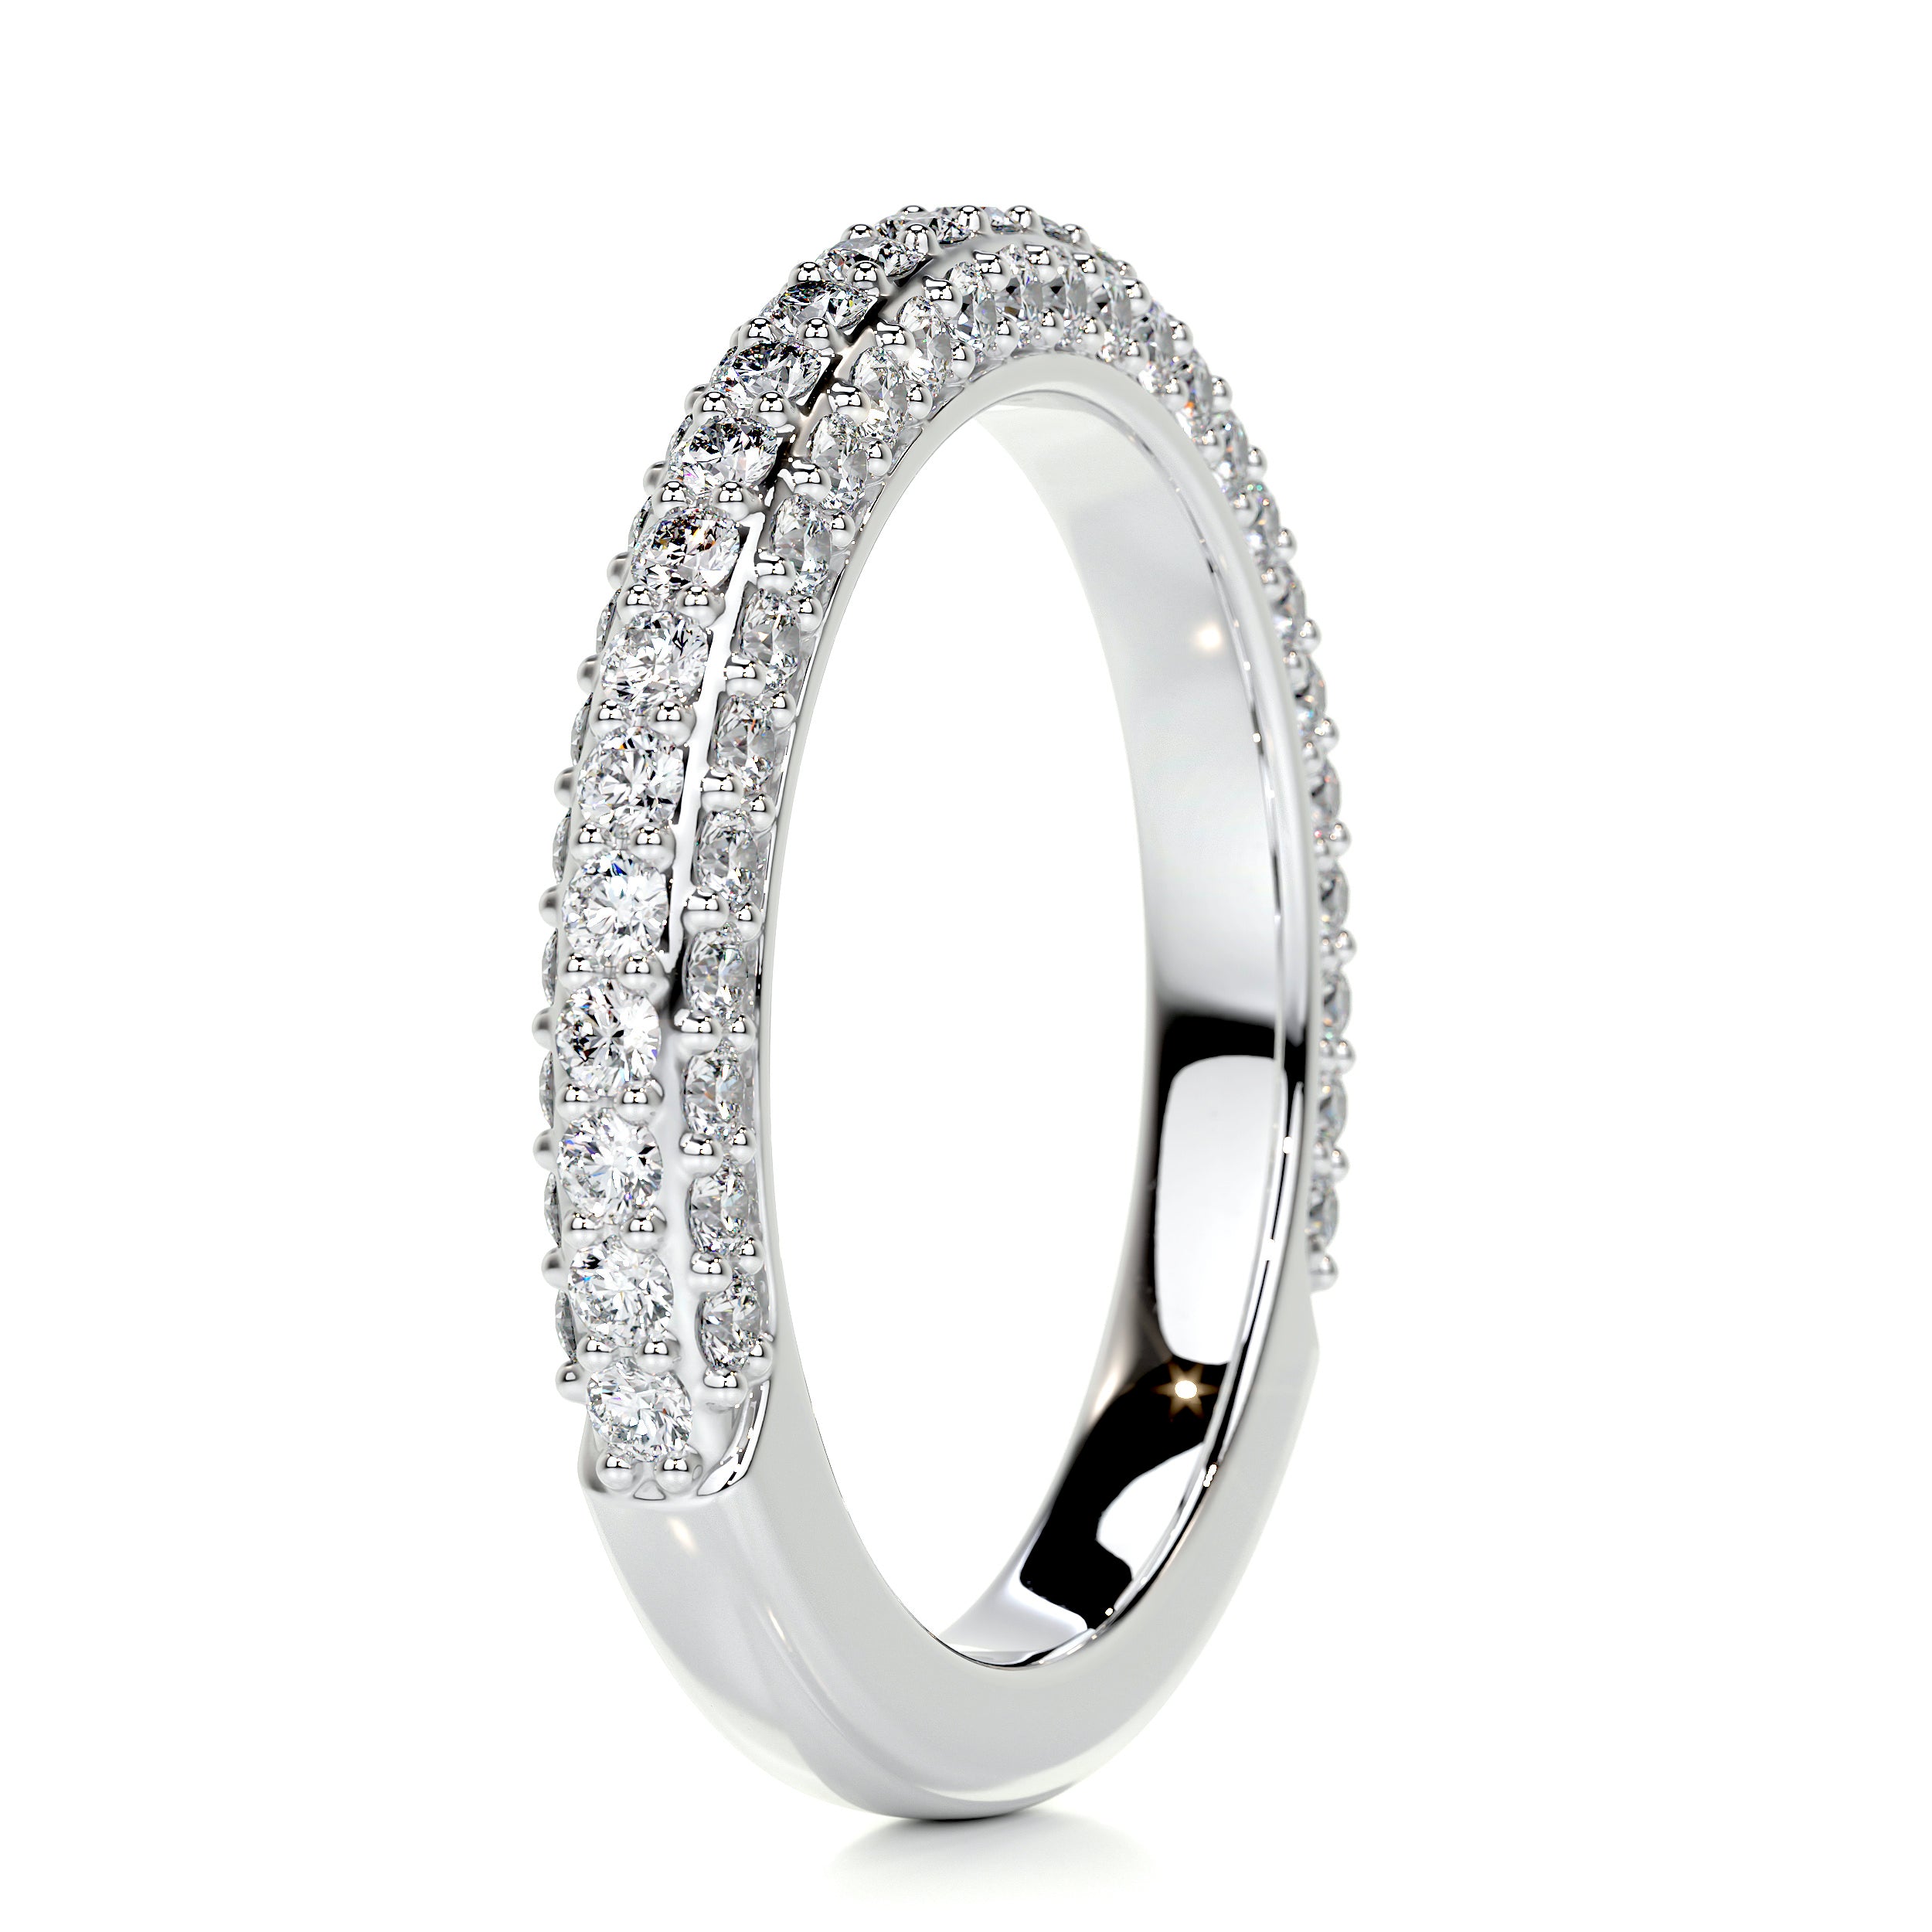 Anastasia Pave Diamond Wedding Ring   (0.75 Carat) -14K White Gold